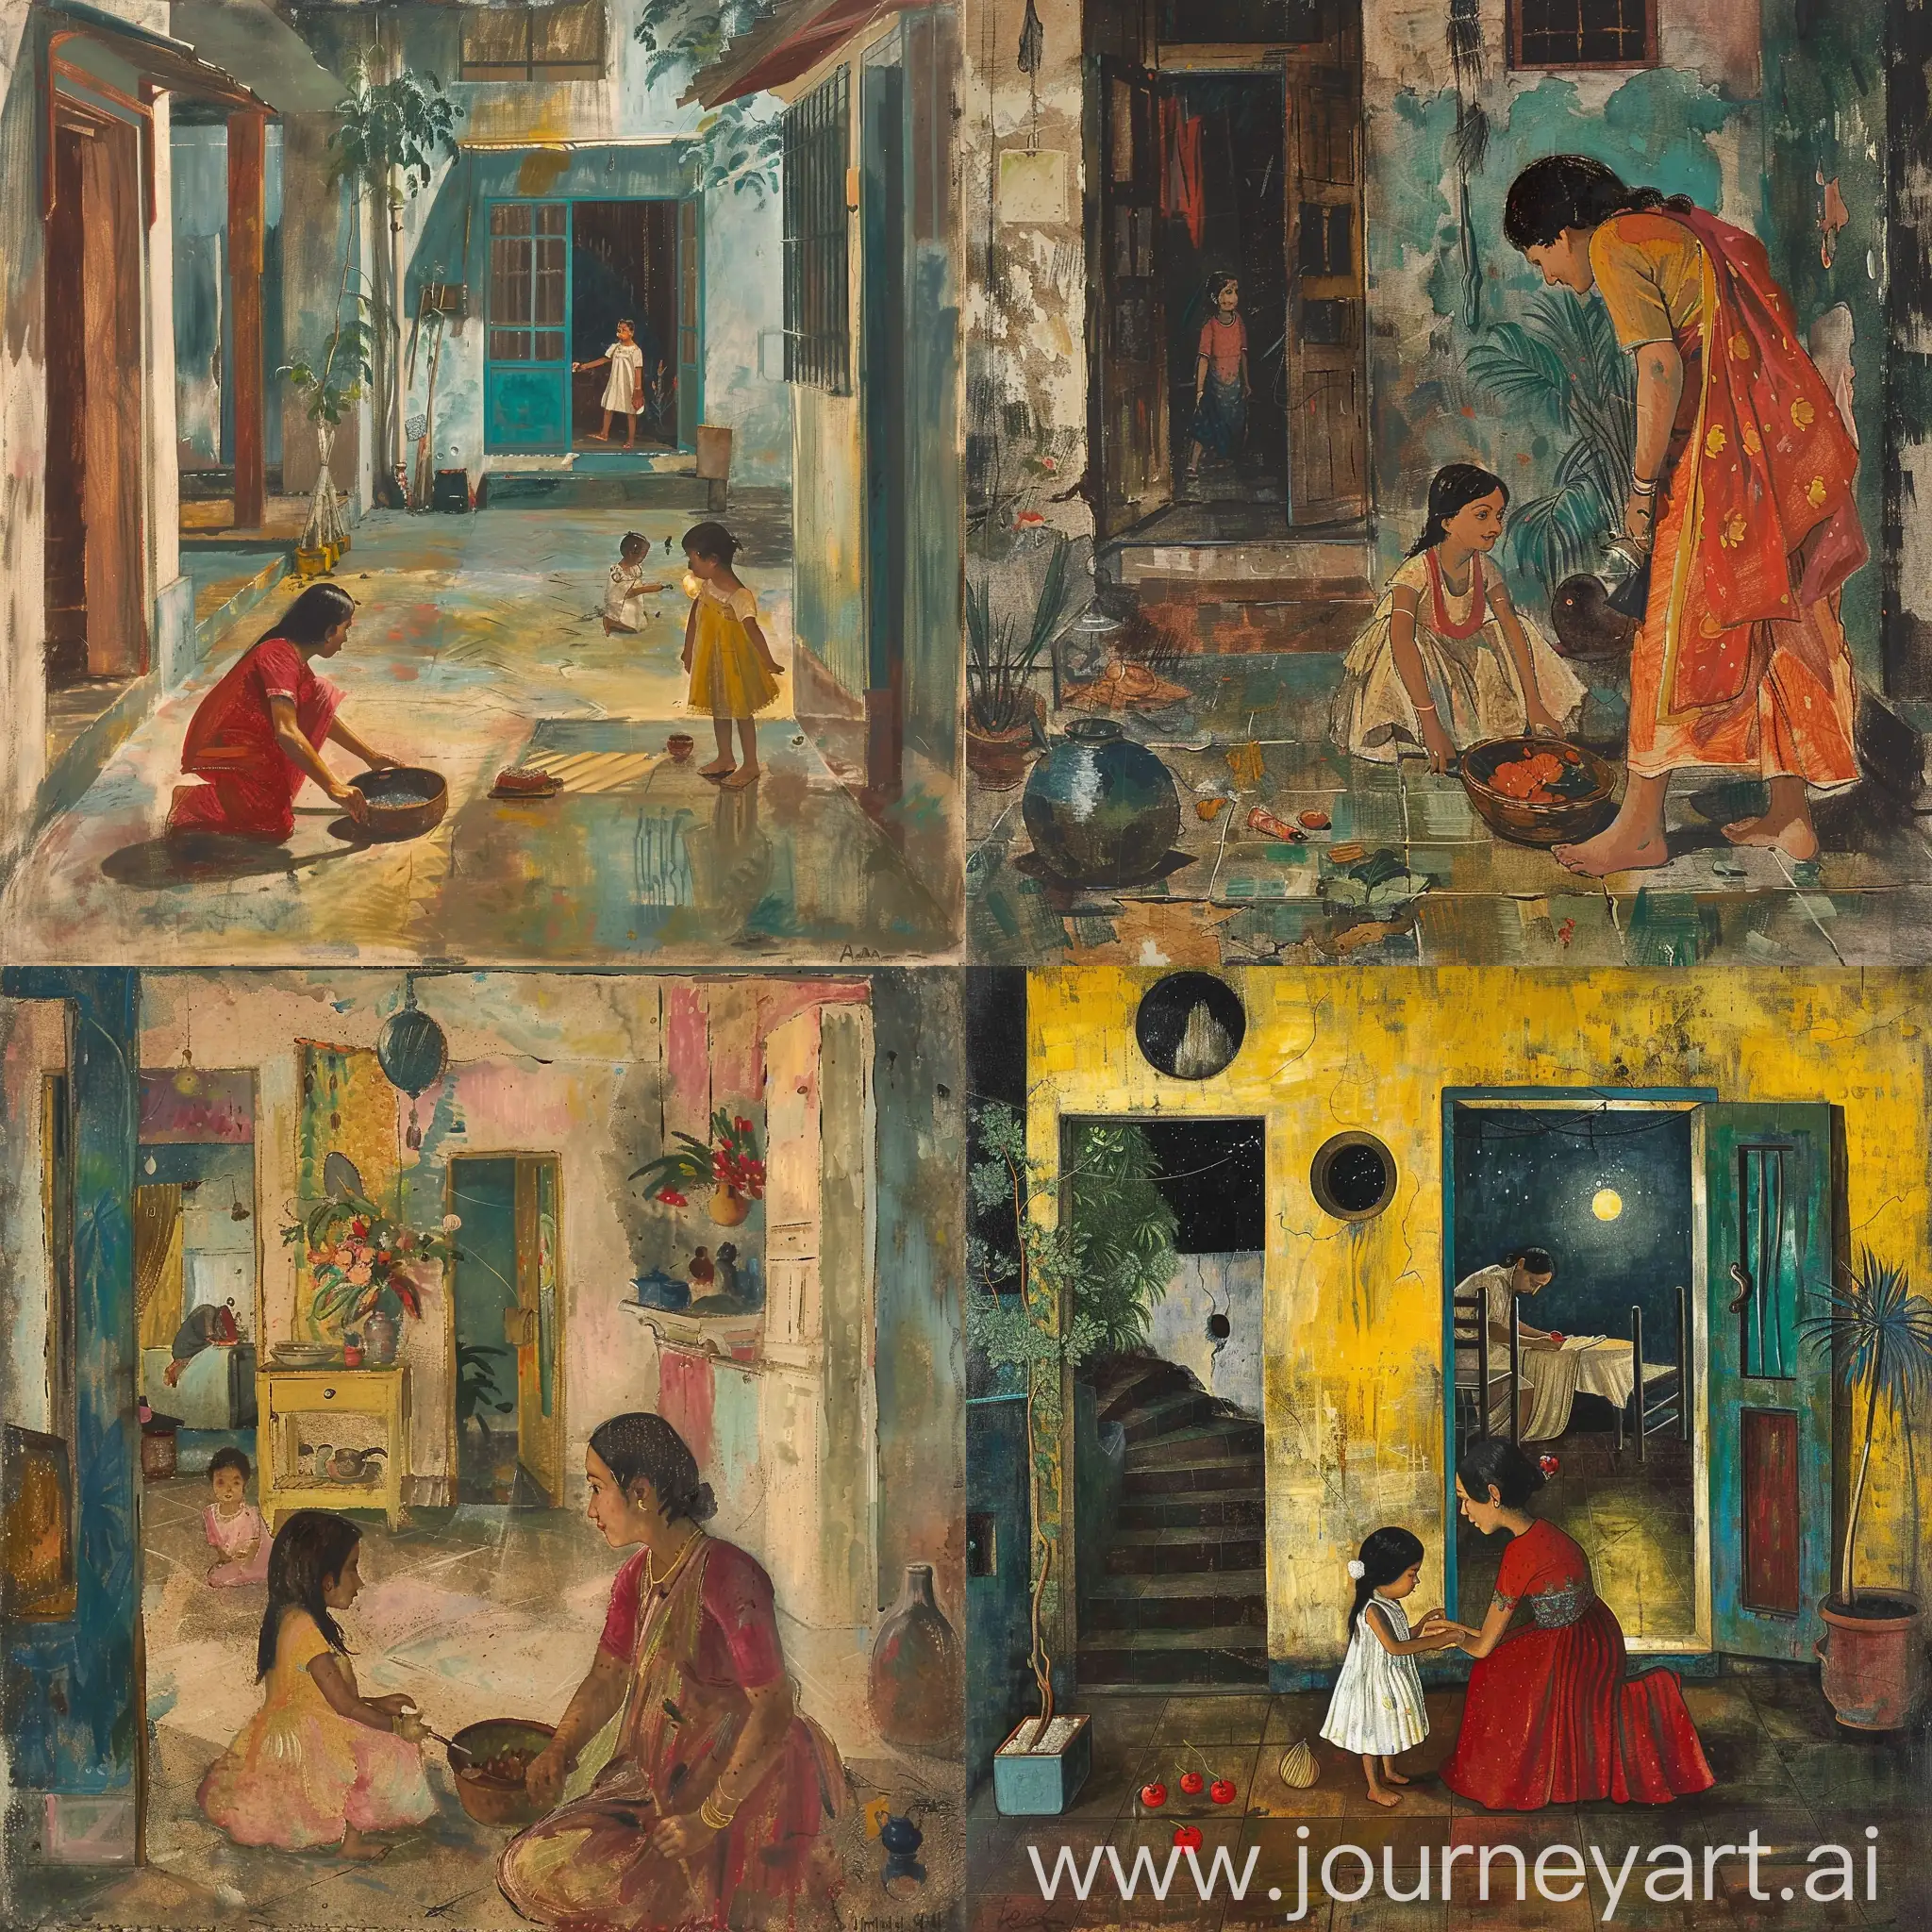 Mother-and-Daughter-Bonding-Through-Art-Amrita-SherGil-Inspired-Painting